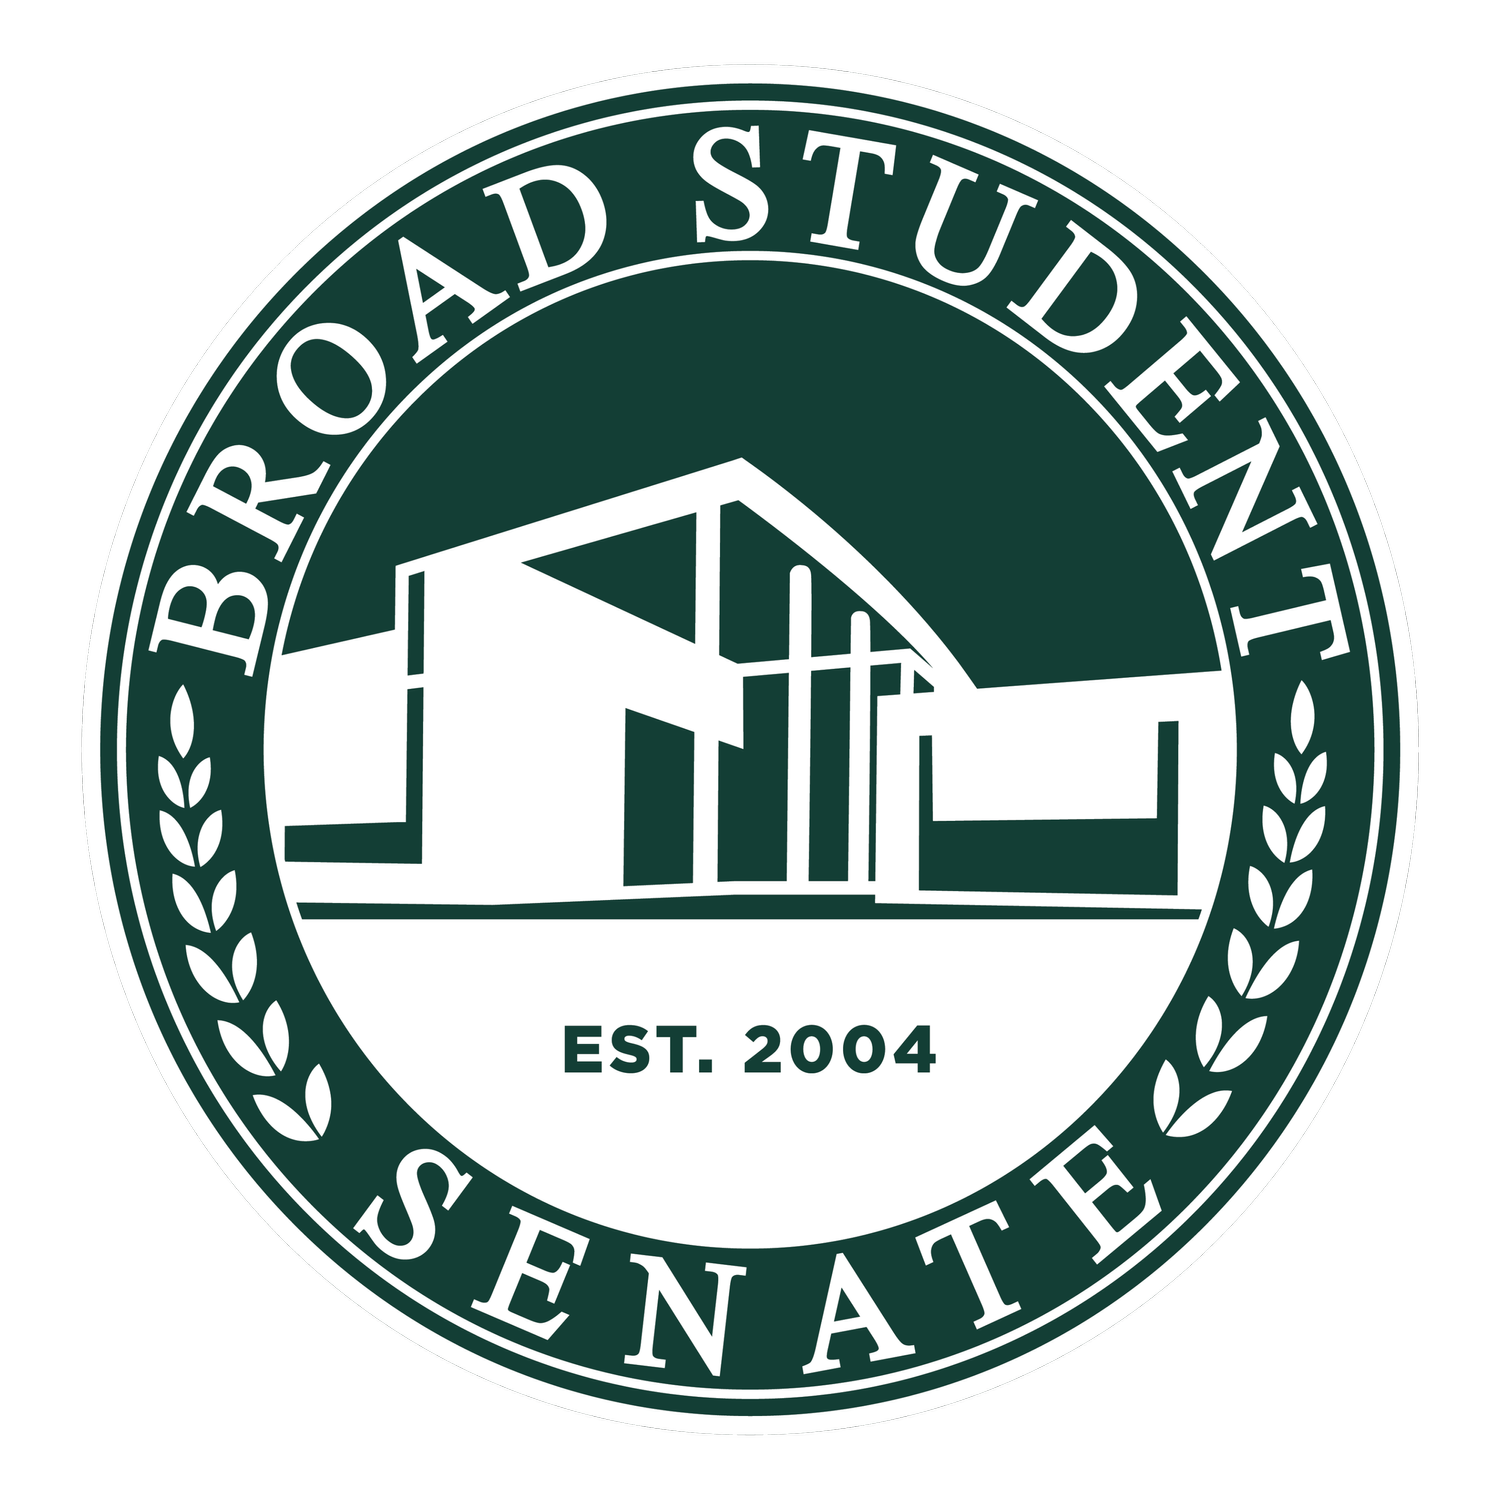 Broad Student Senate